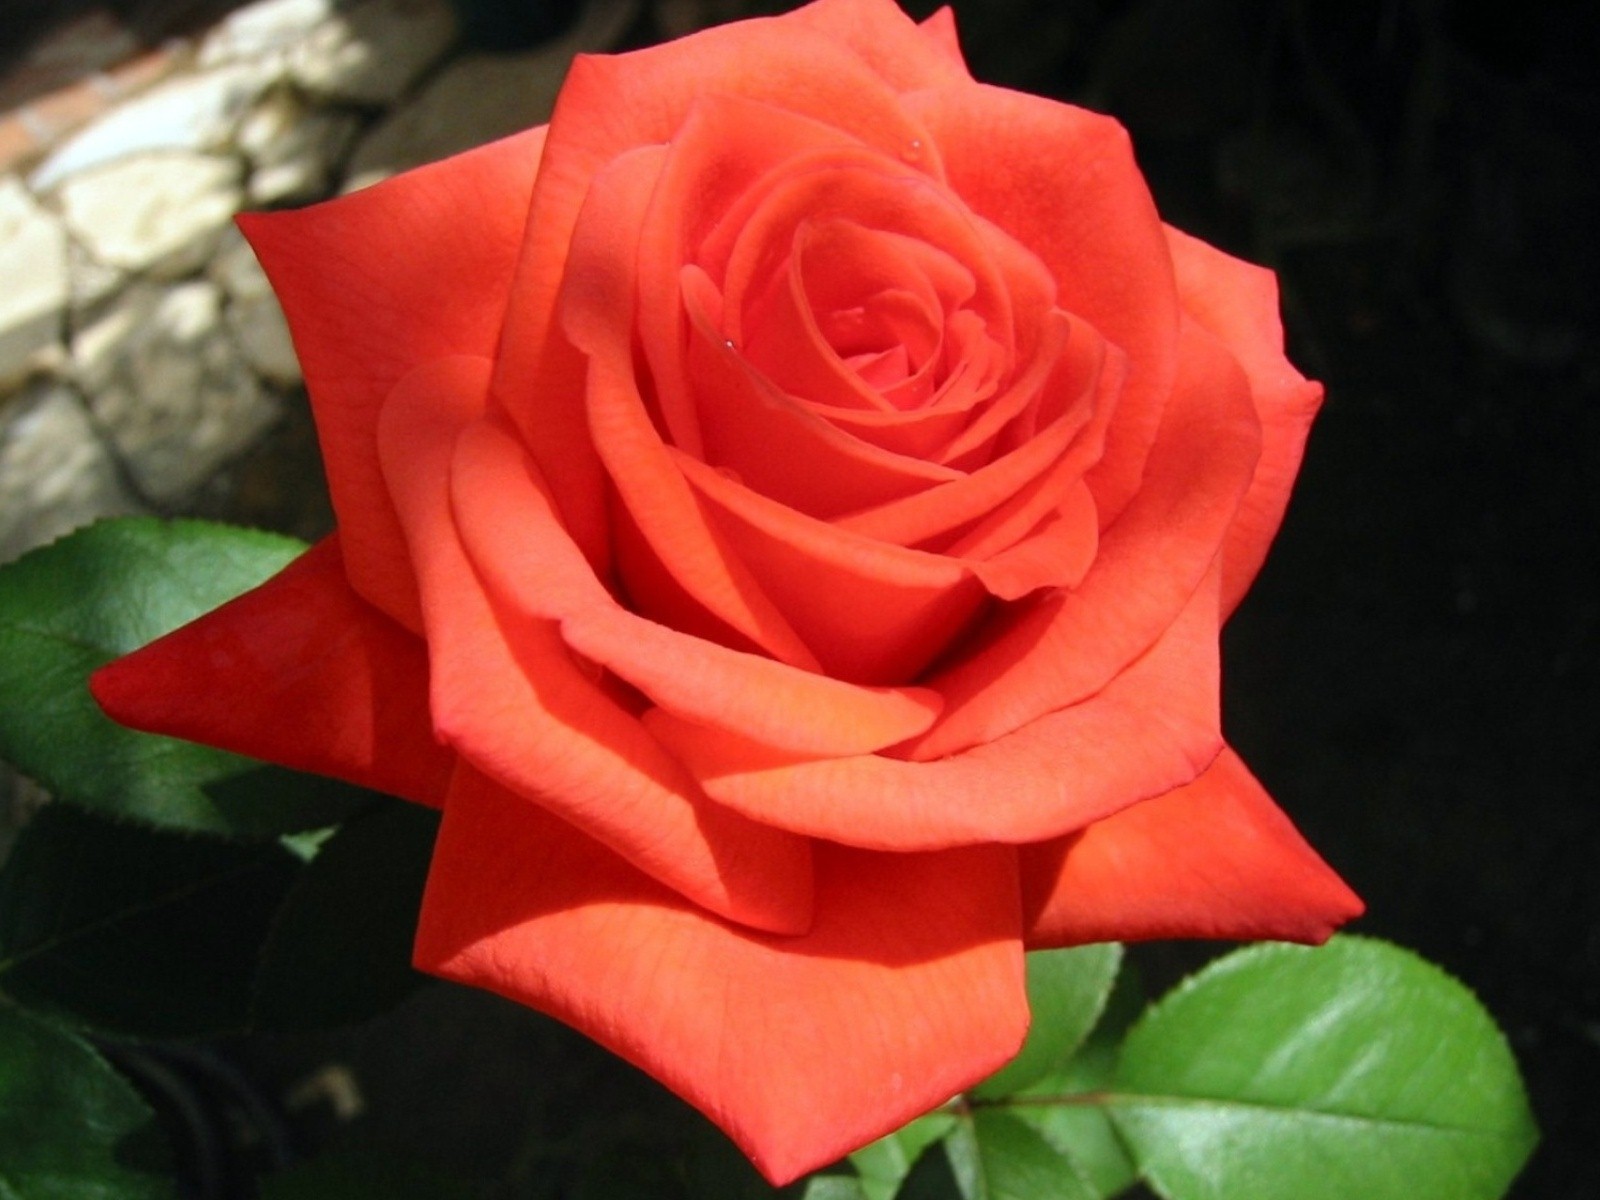 rose flower wallpaper hd free download,flower,rose,garden roses,flowering plant,petal